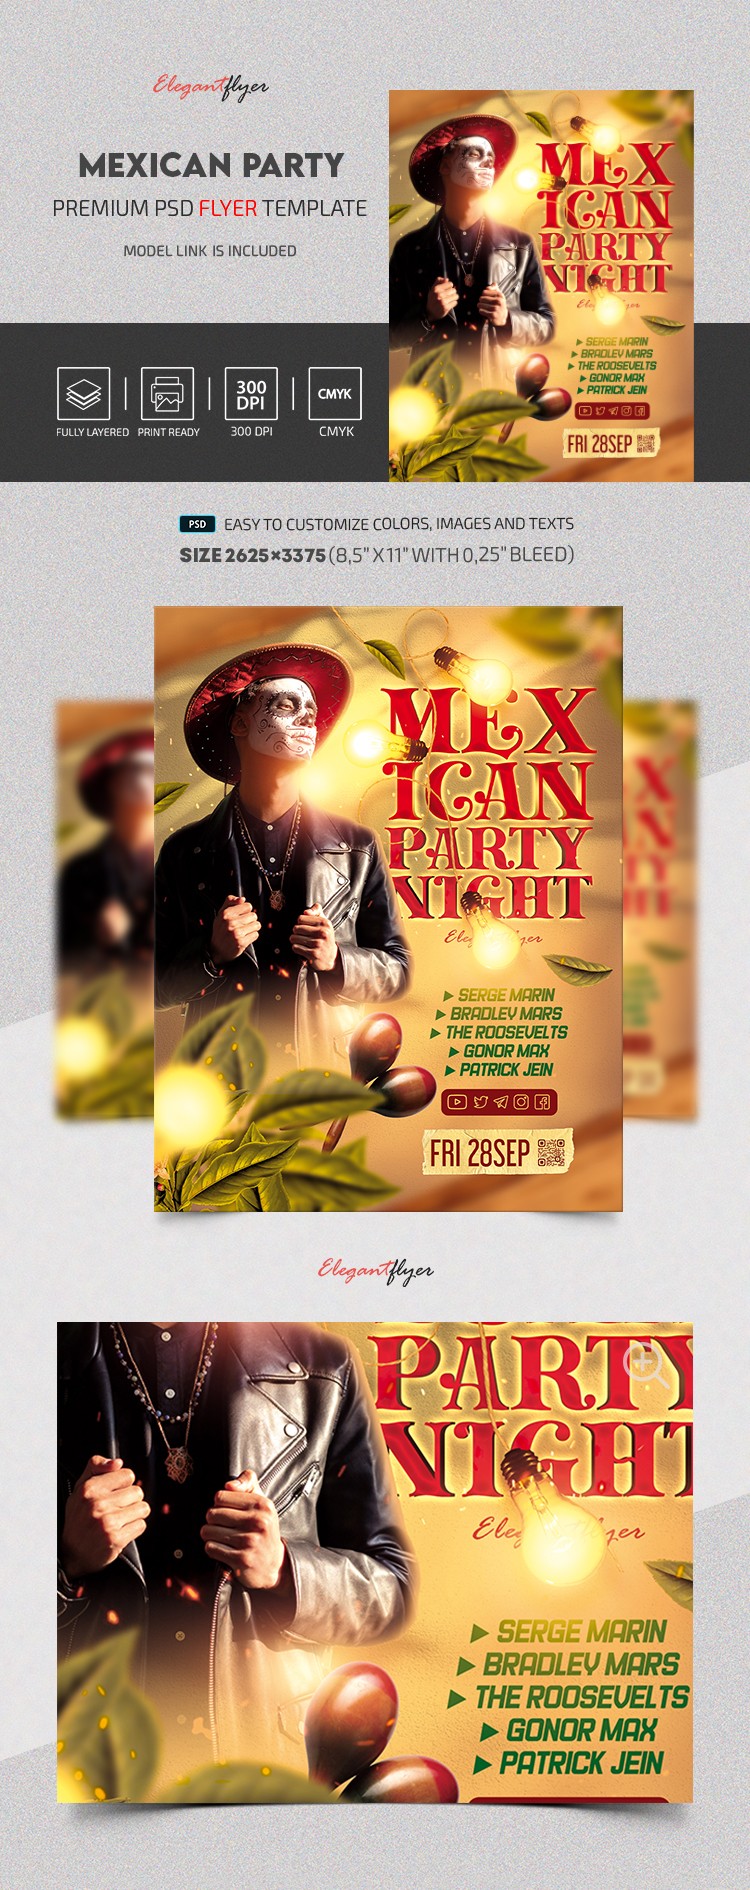 Mexican Party Flyer by ElegantFlyer